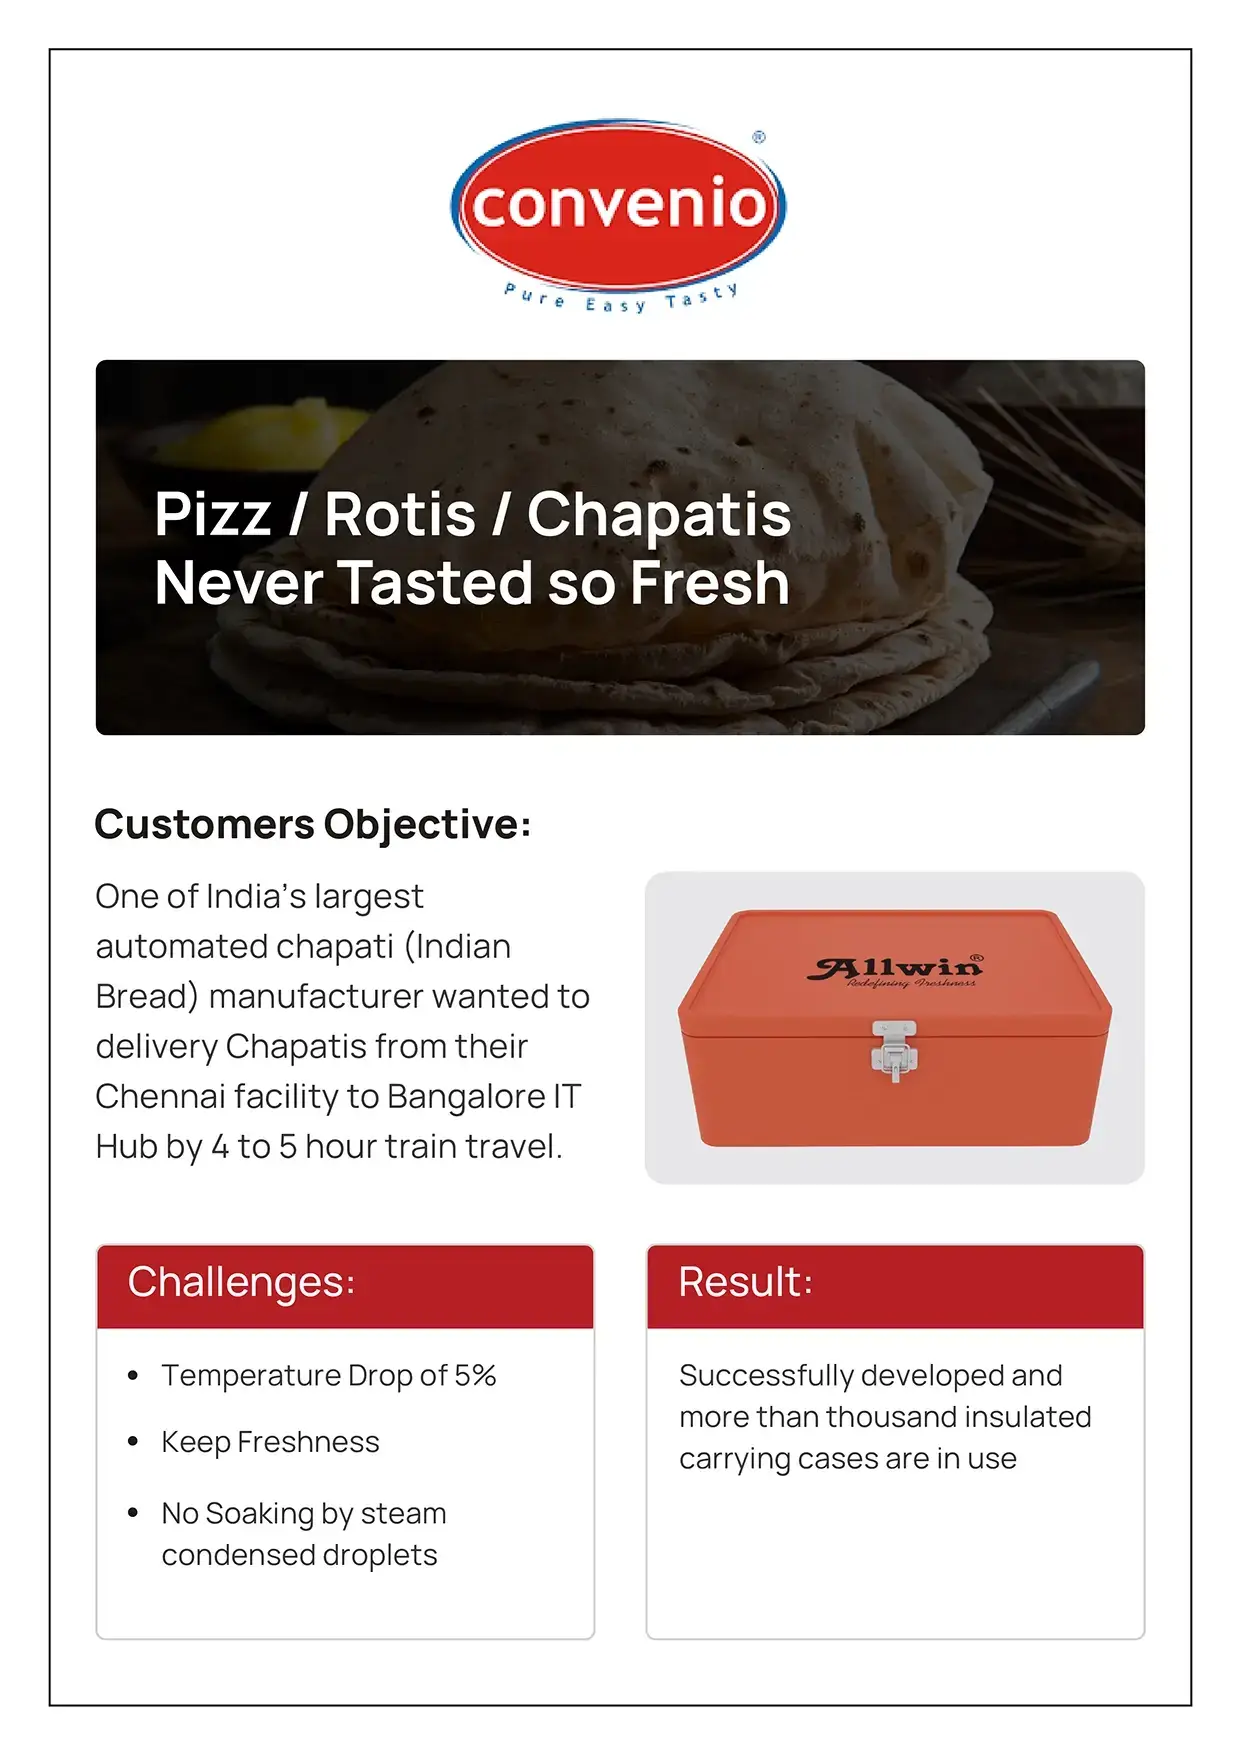 Convenio : Pizz/ Rotis / Chapatis Never Tested so Fresh